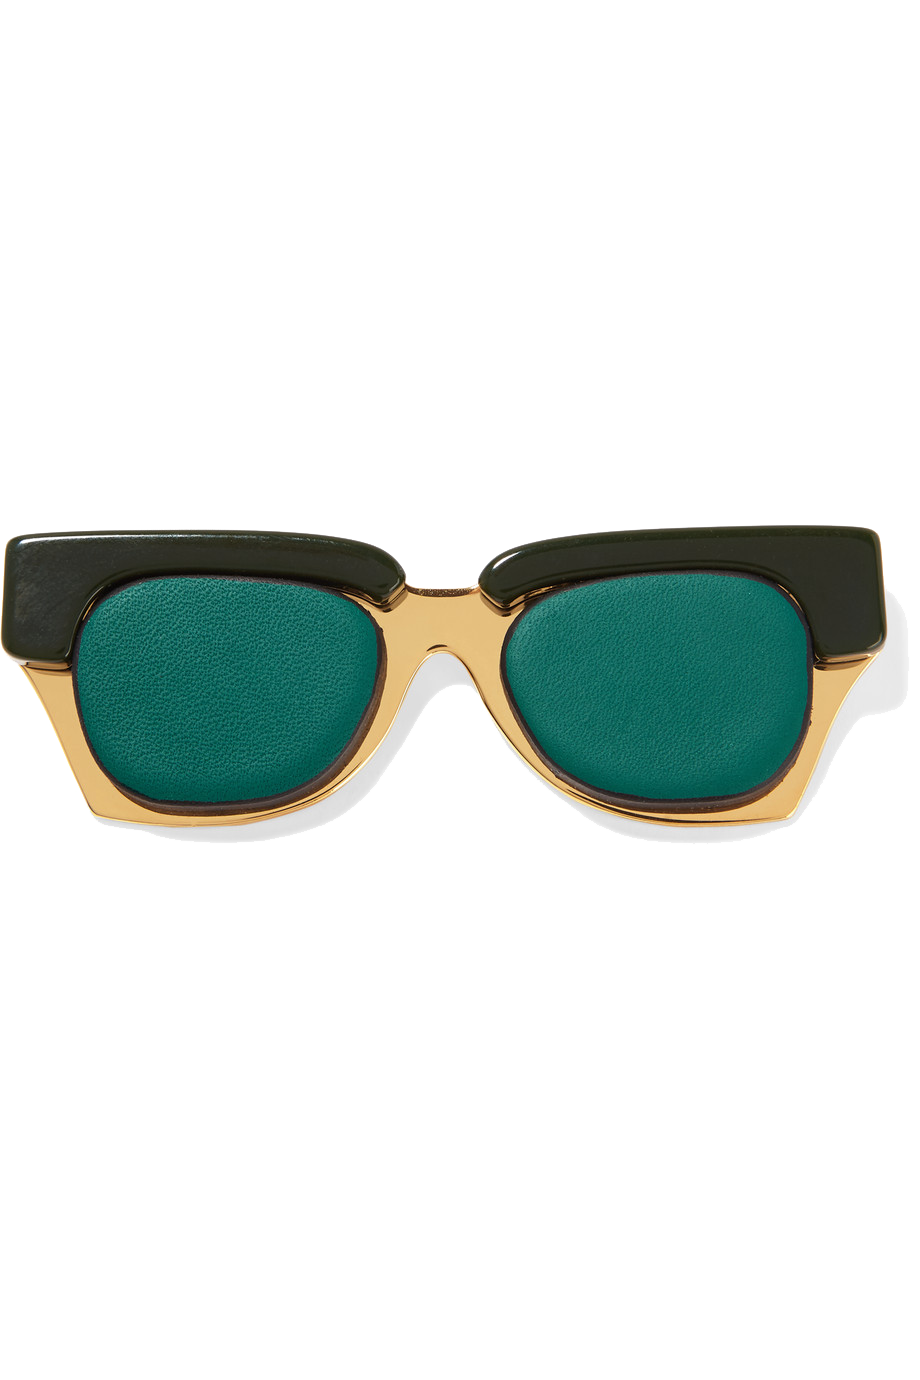 Goggles Sunglasses Fashion PNG File HD Clipart